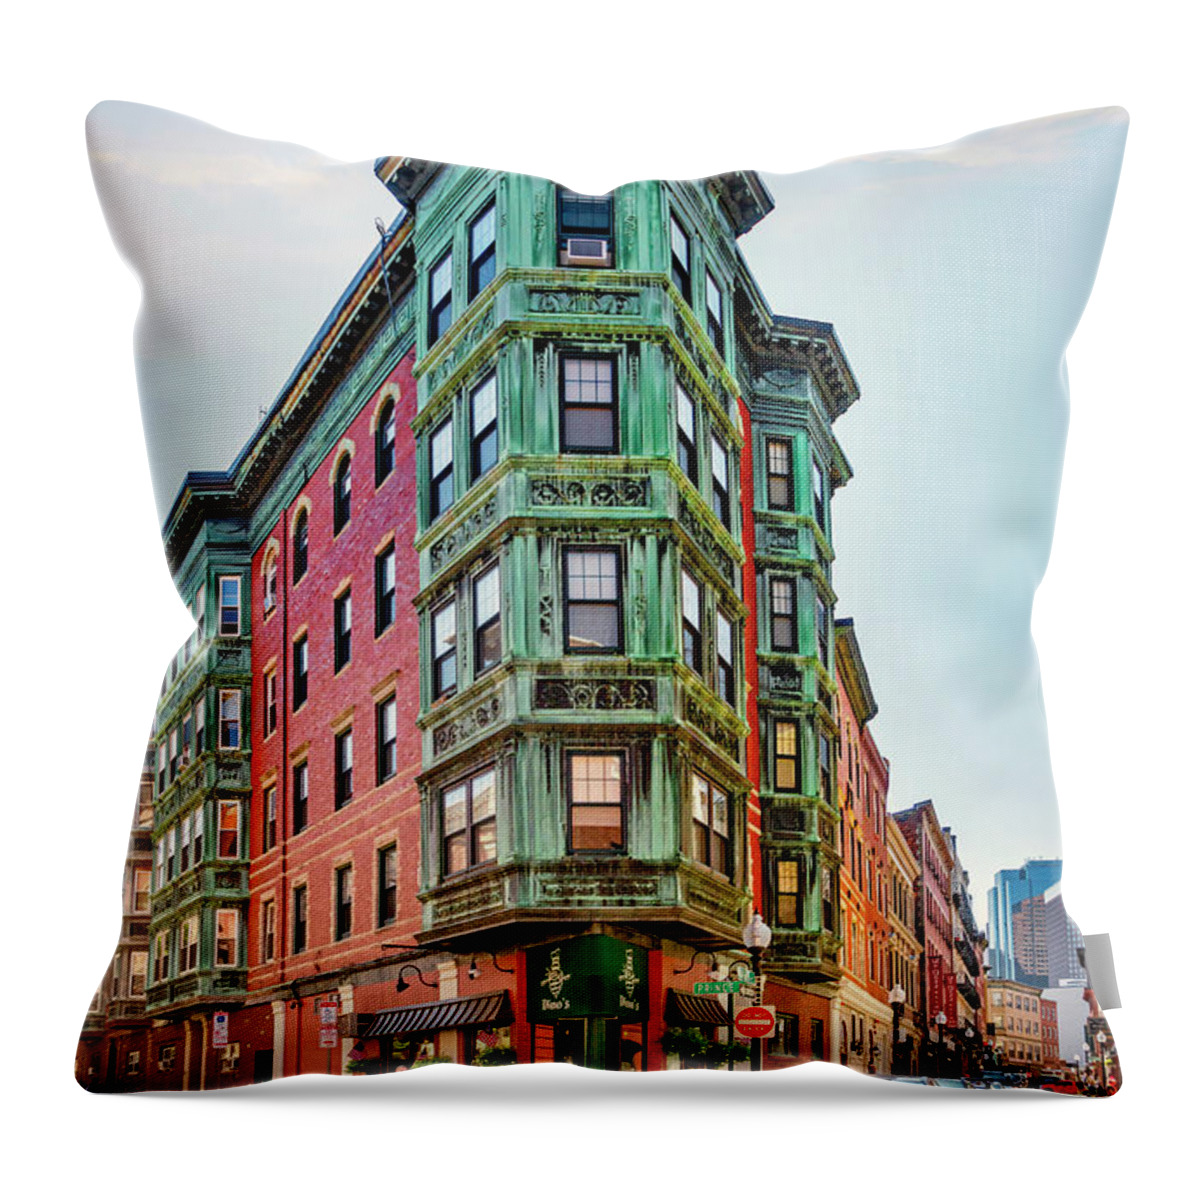 Estock Throw Pillow featuring the digital art Salem & Prince St Building, Boston, Ma by Laura Zeid